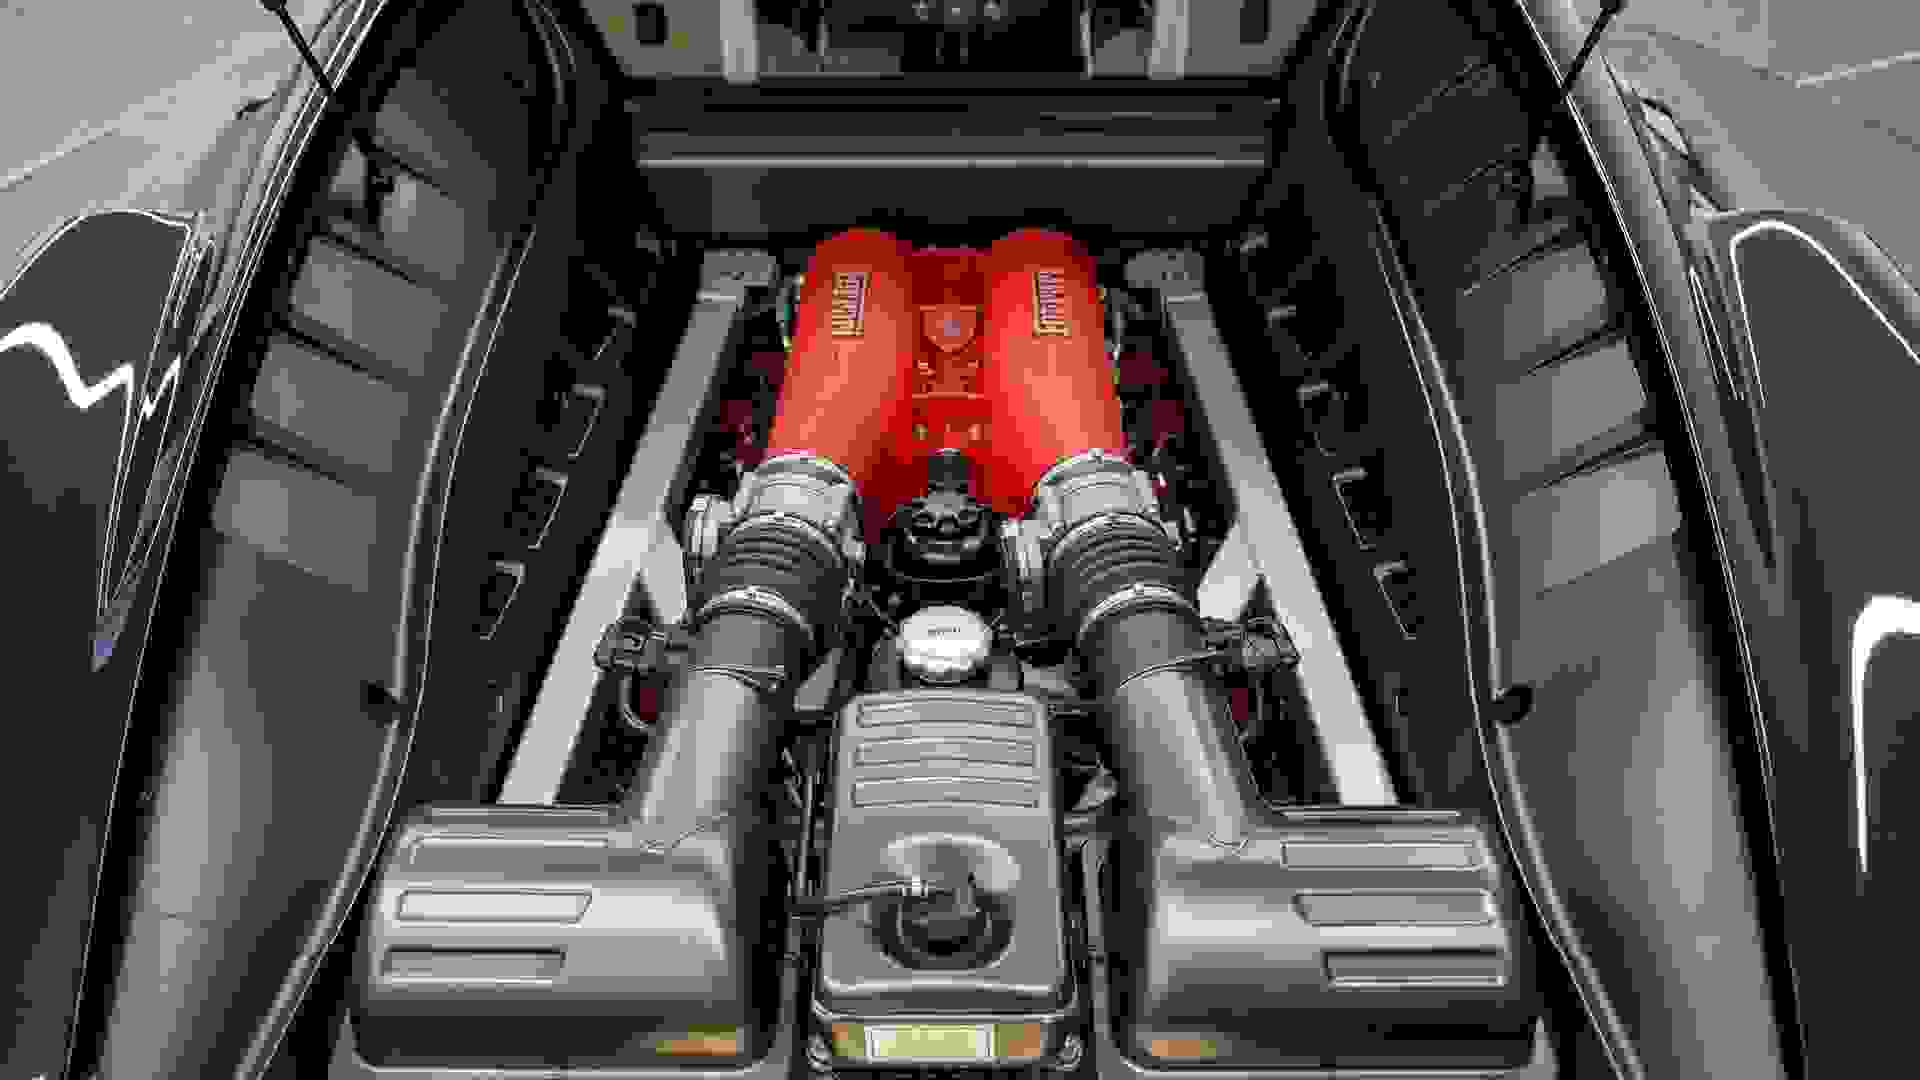 Ferrari F430 Photo 7a086155-ccea-40f2-8a25-390297444fa3.jpg